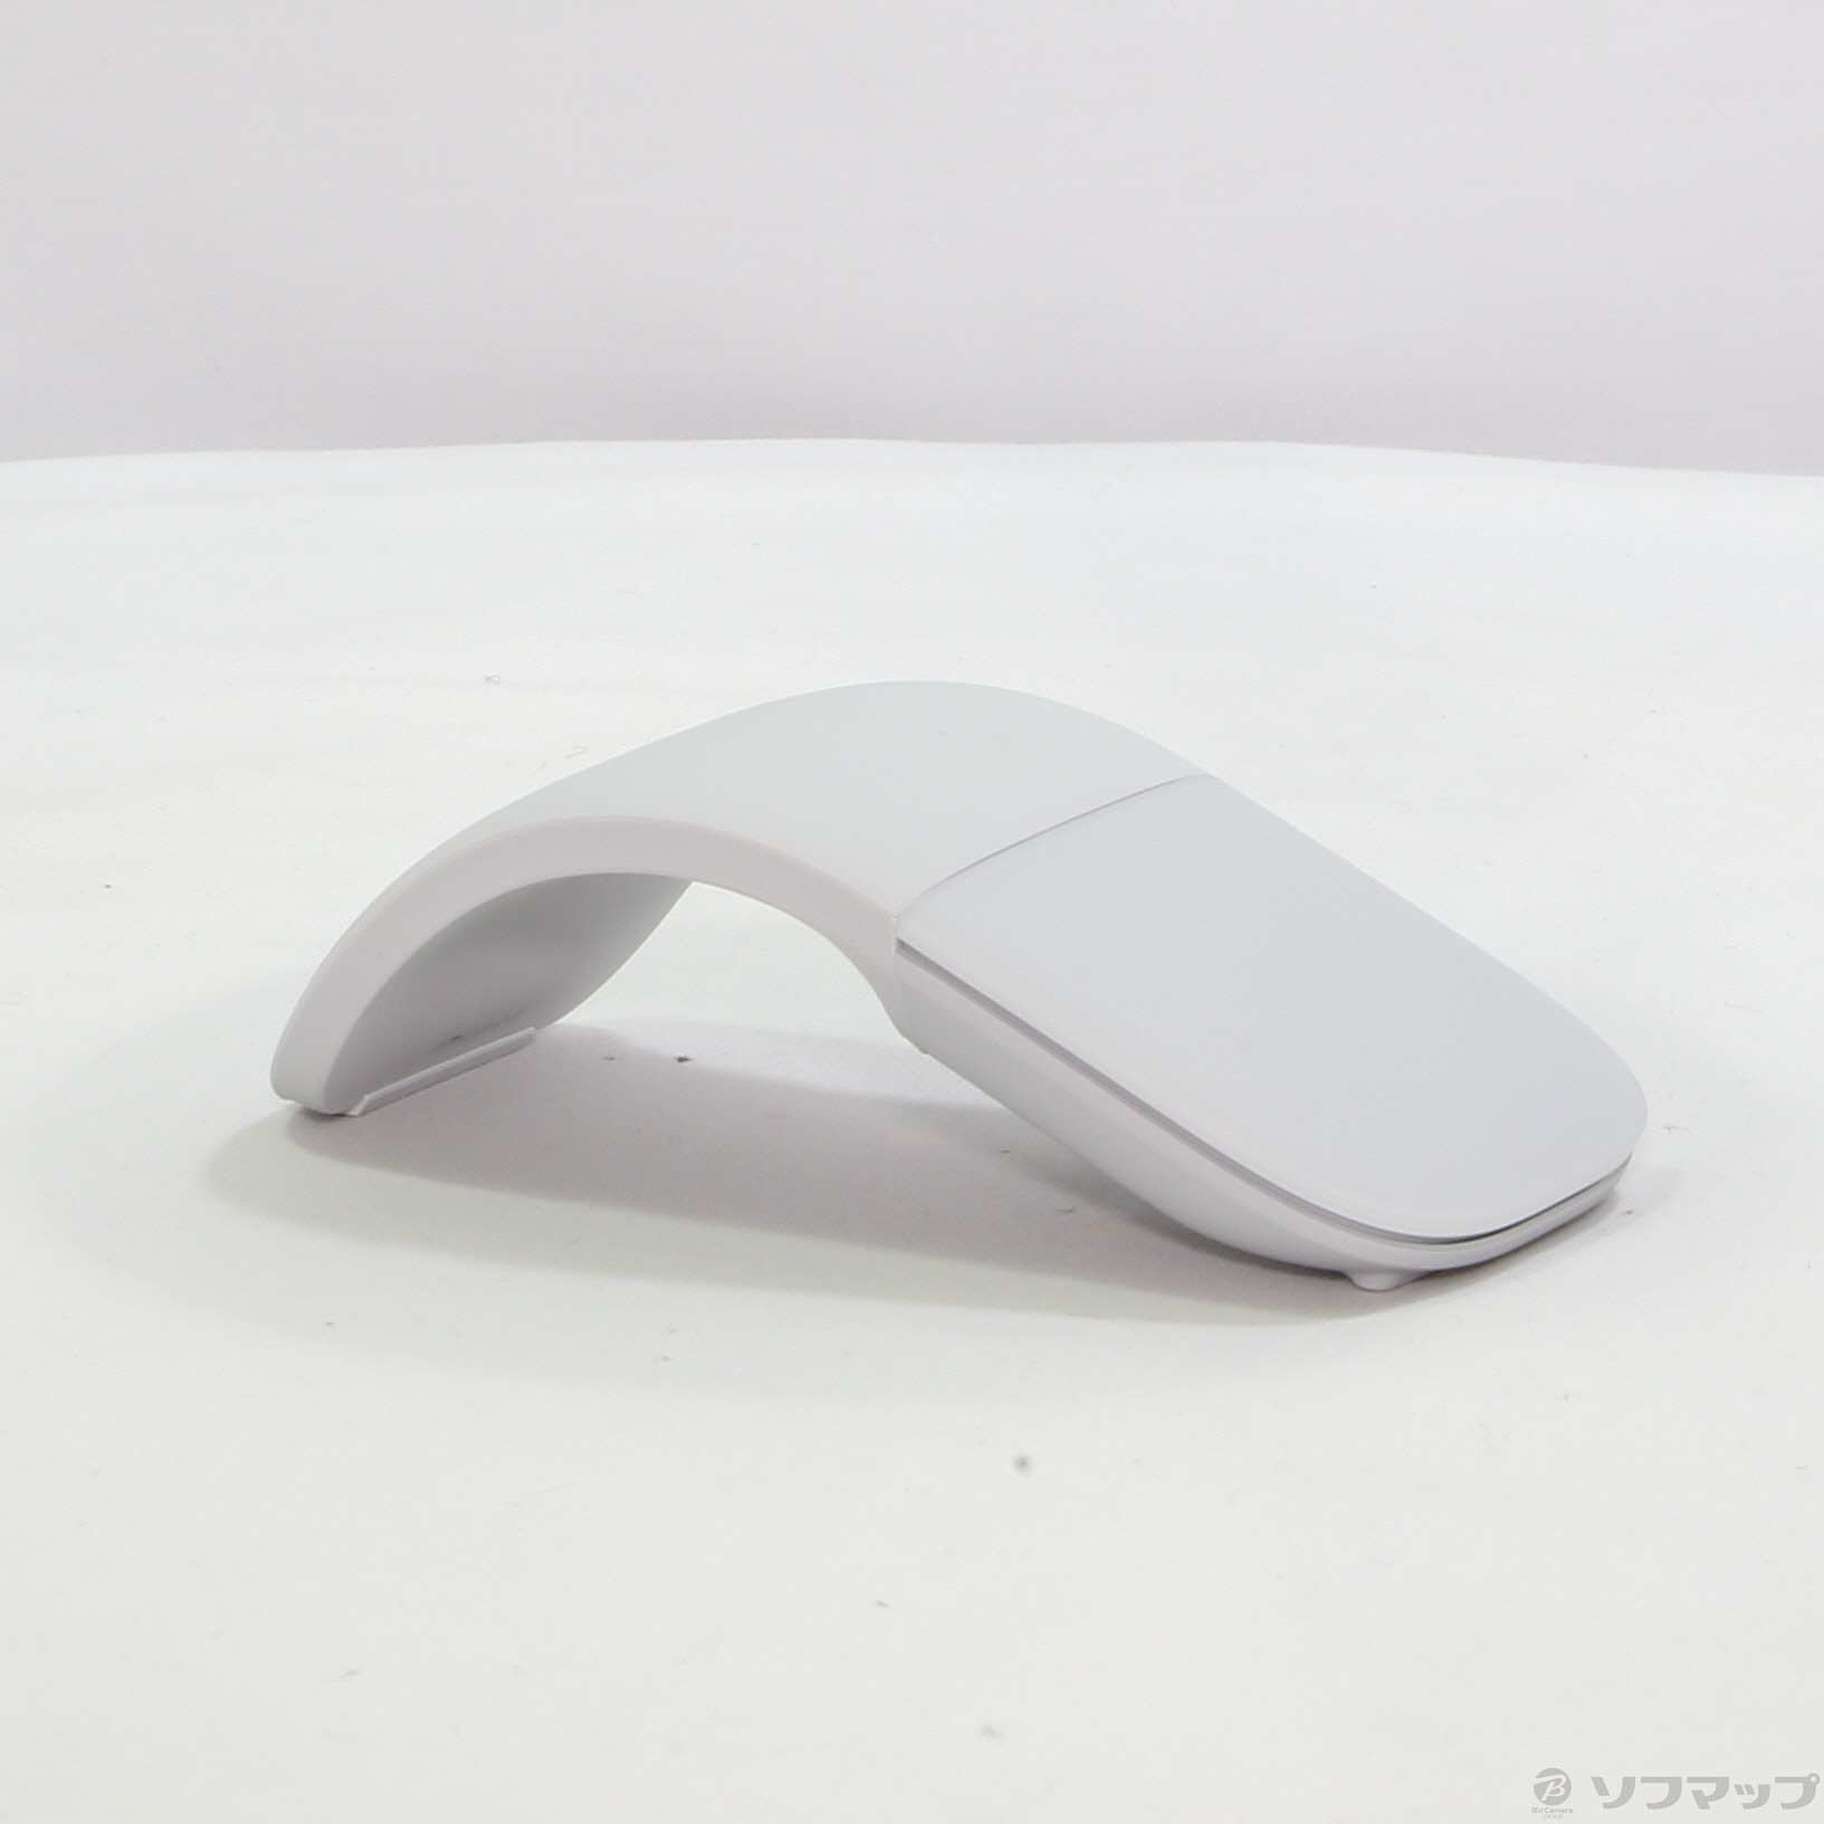 Surface Arc Mouse CZV-00007 グレー